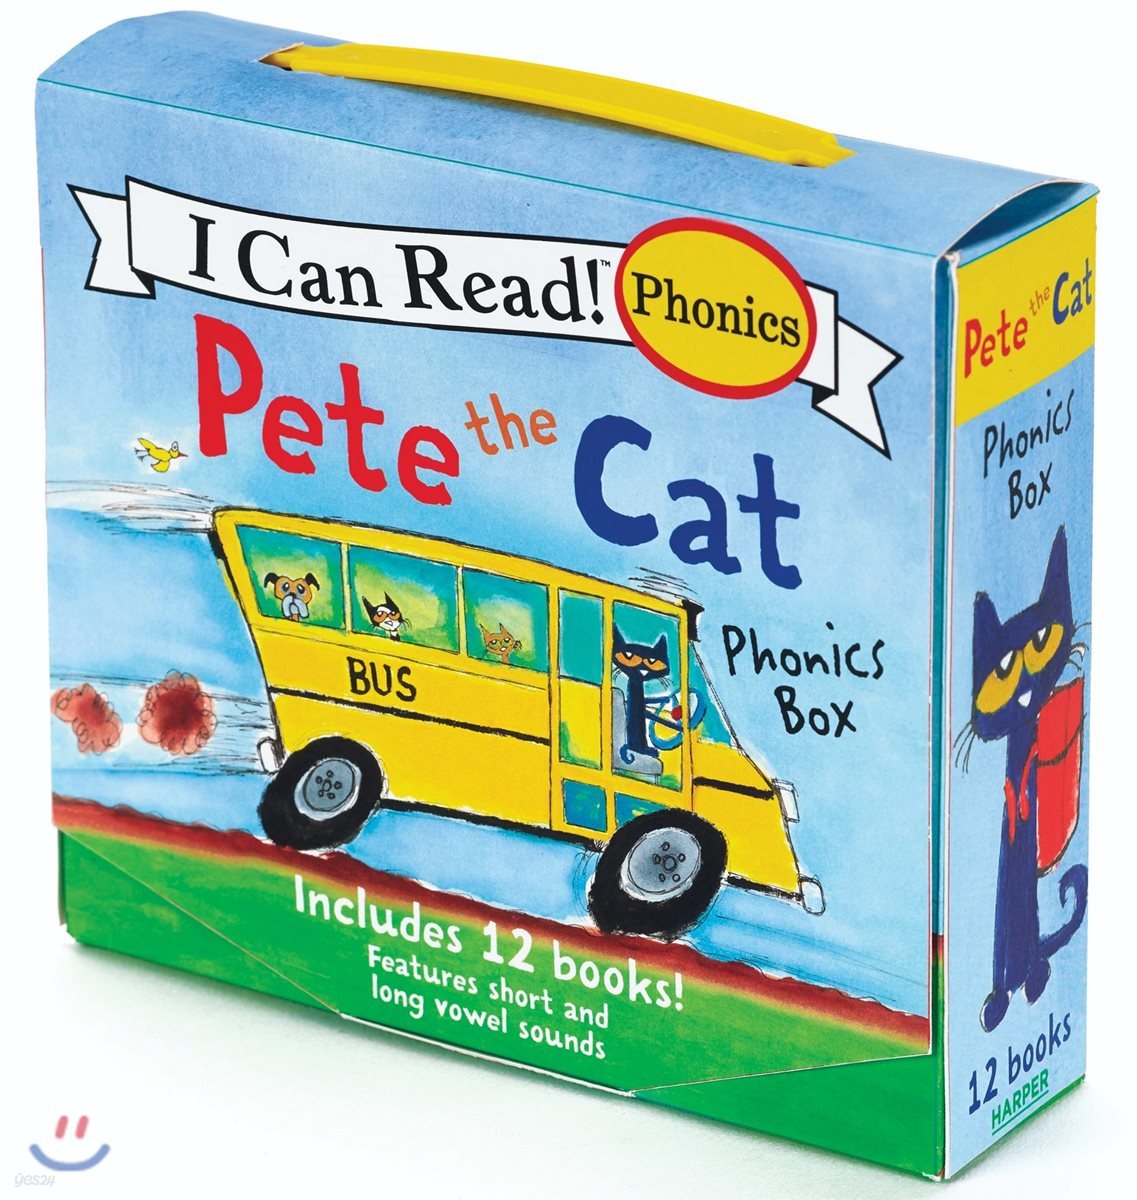 [I Can Read] Pete the Cat Phonics Box